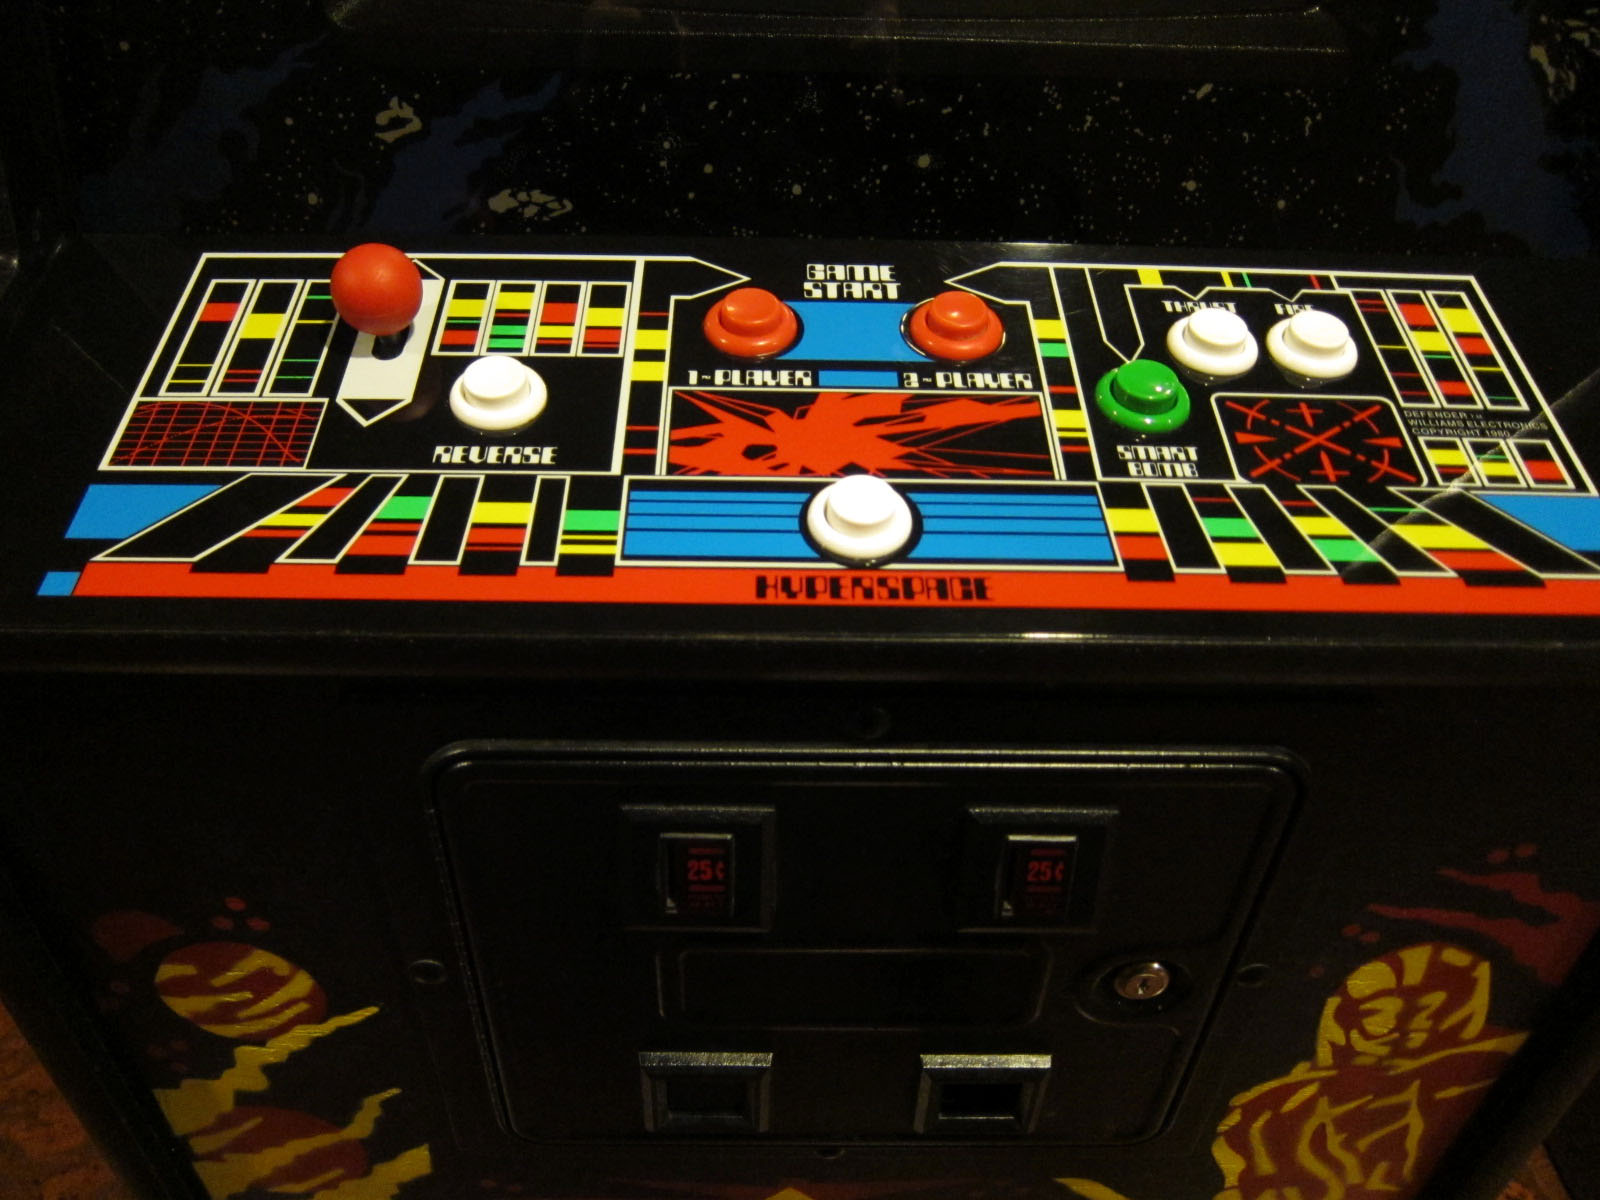 1981 Williams Defender upright arcade game